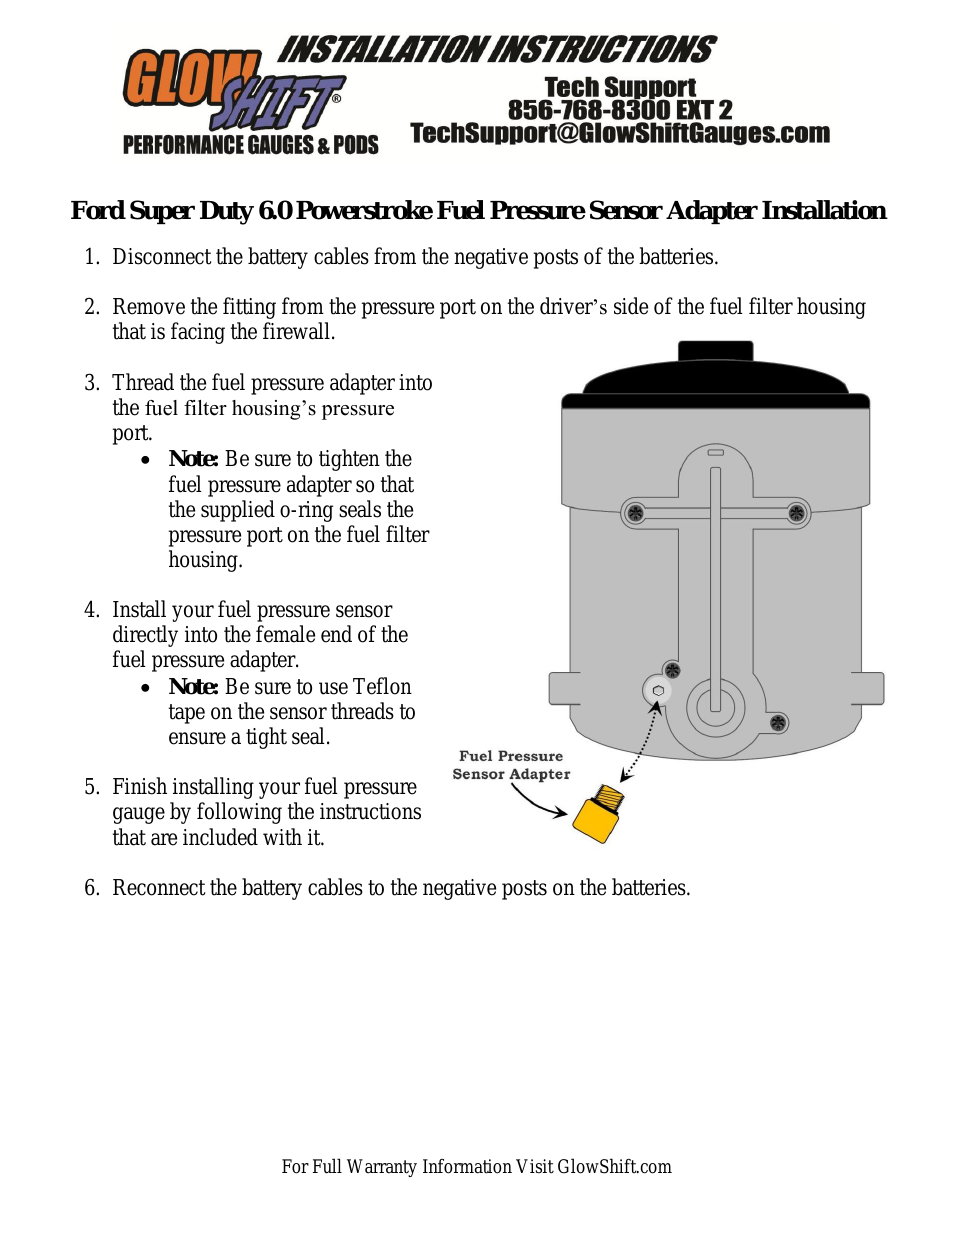 Ford Super Duty 6.0 Powerstroke Fuel Pressure Sensor Adapter